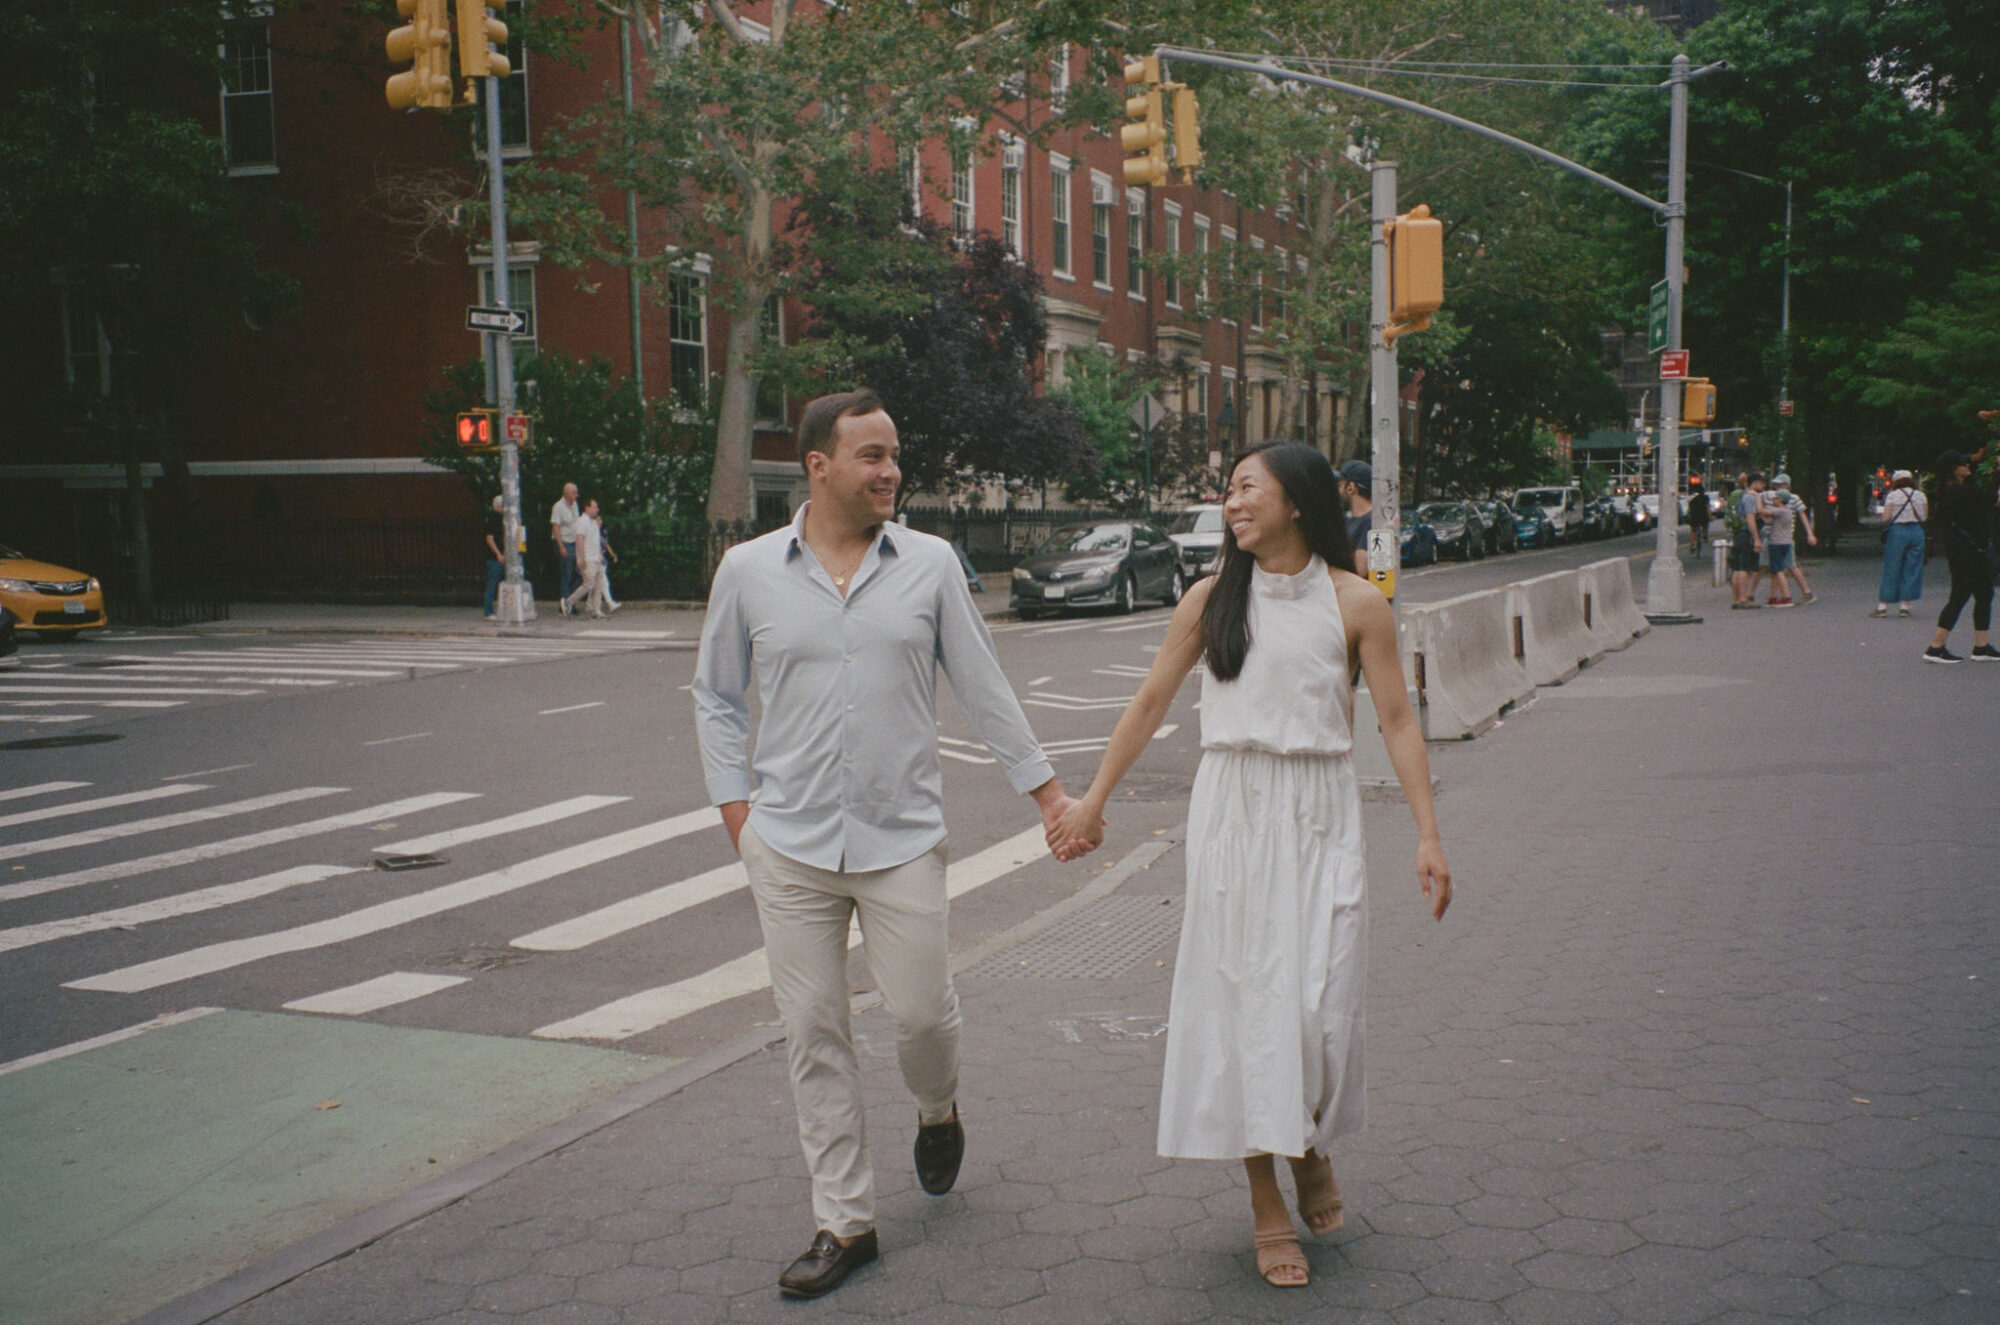 Washington square park, engagement photos, new york city streets, film